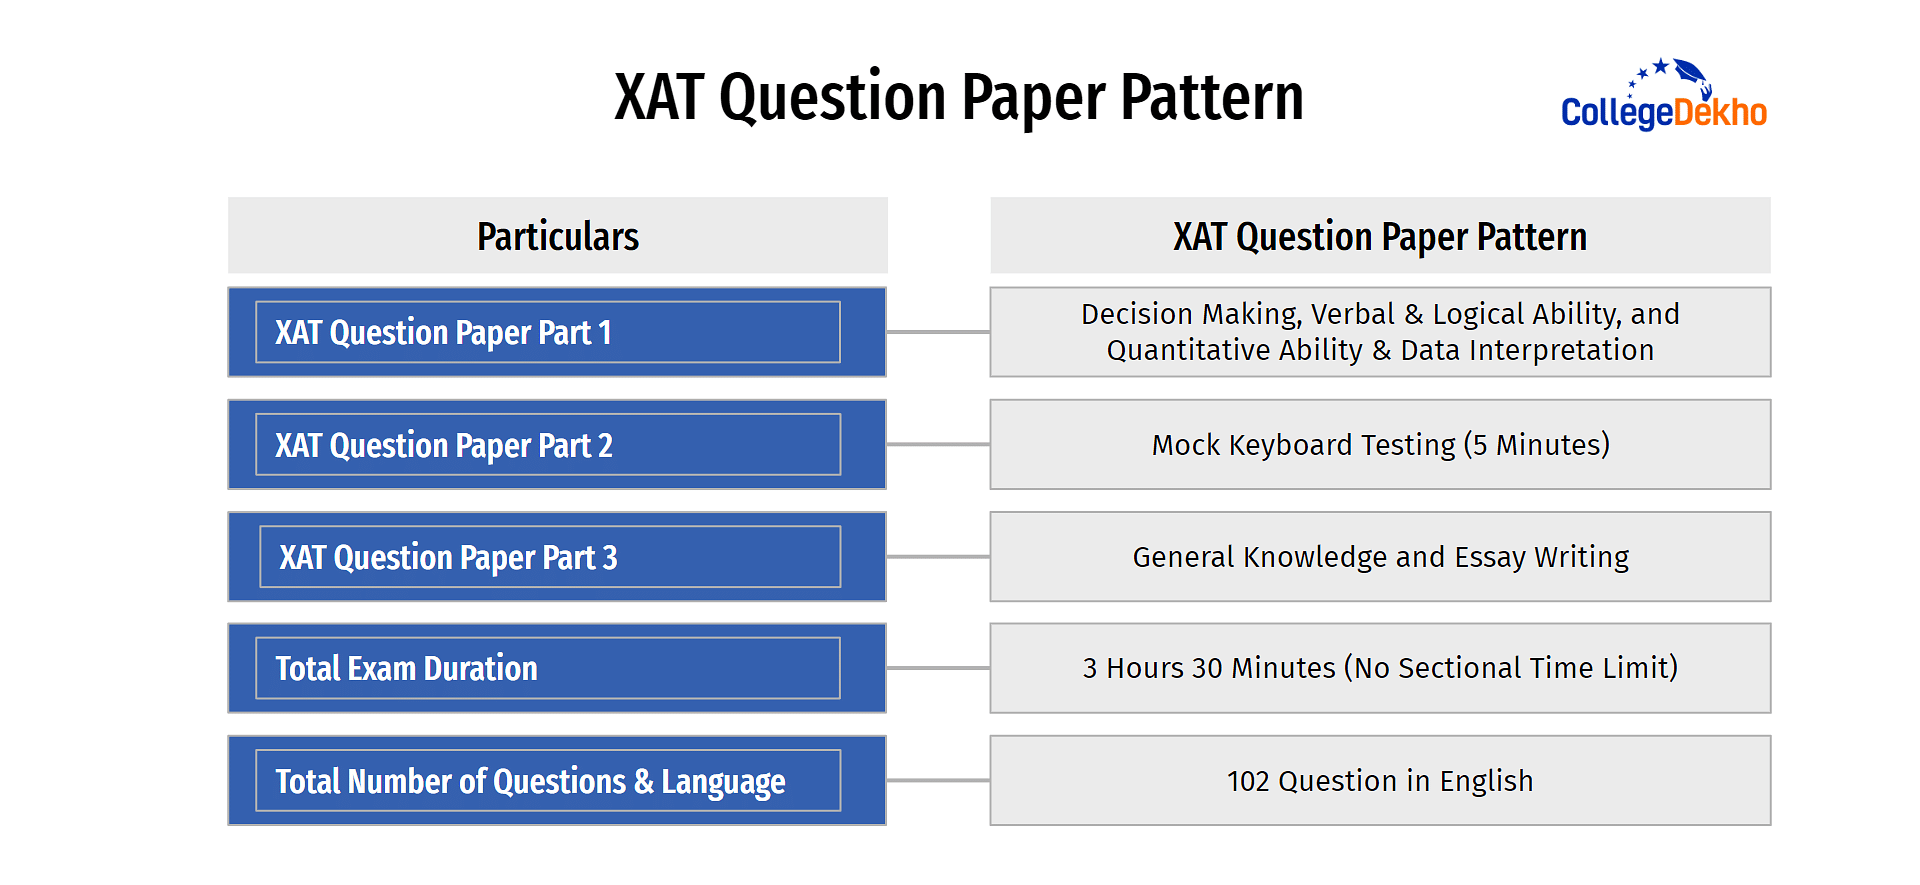 XAT Question Paper Pattern